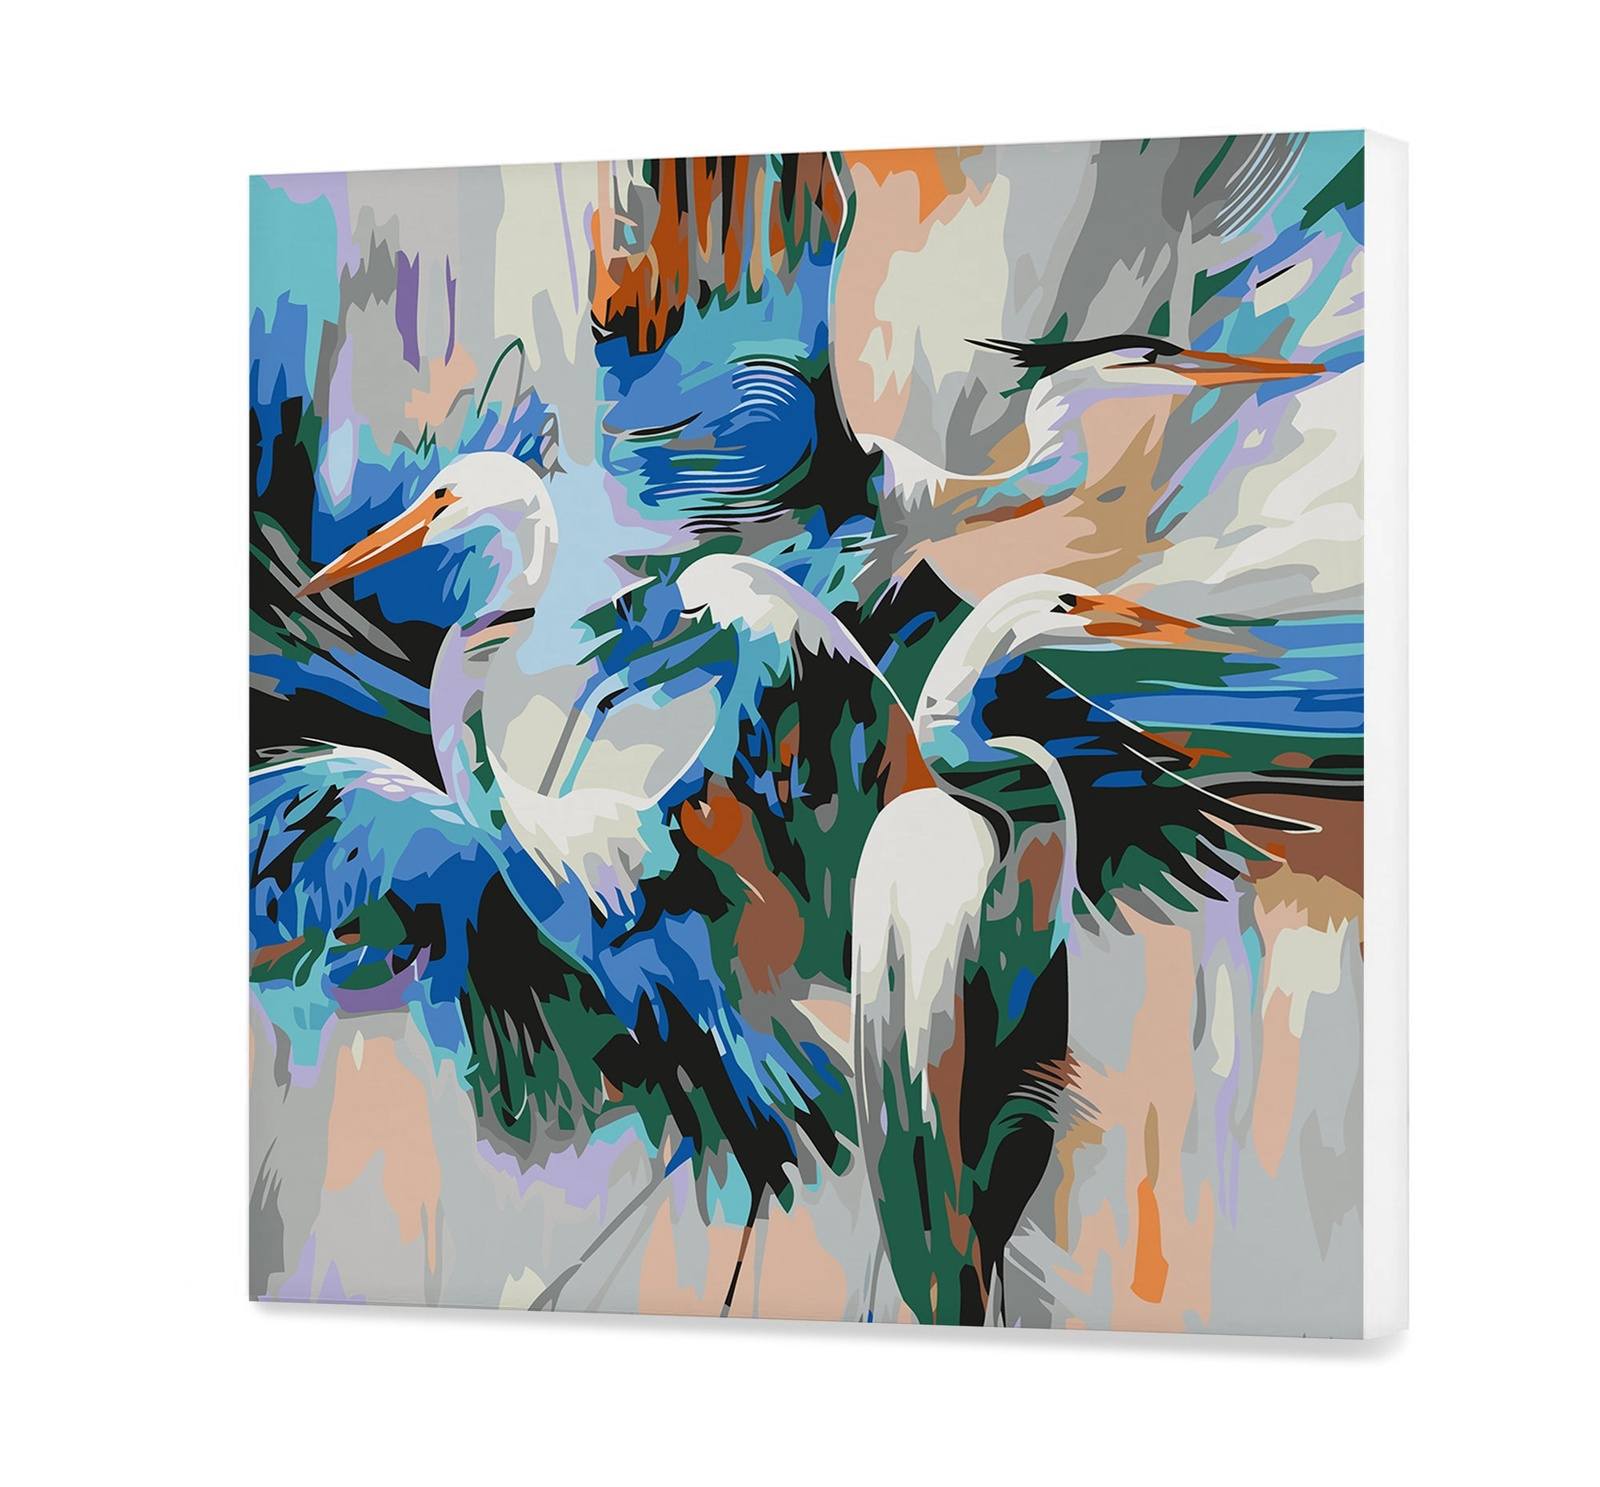 Free Storks (A464)